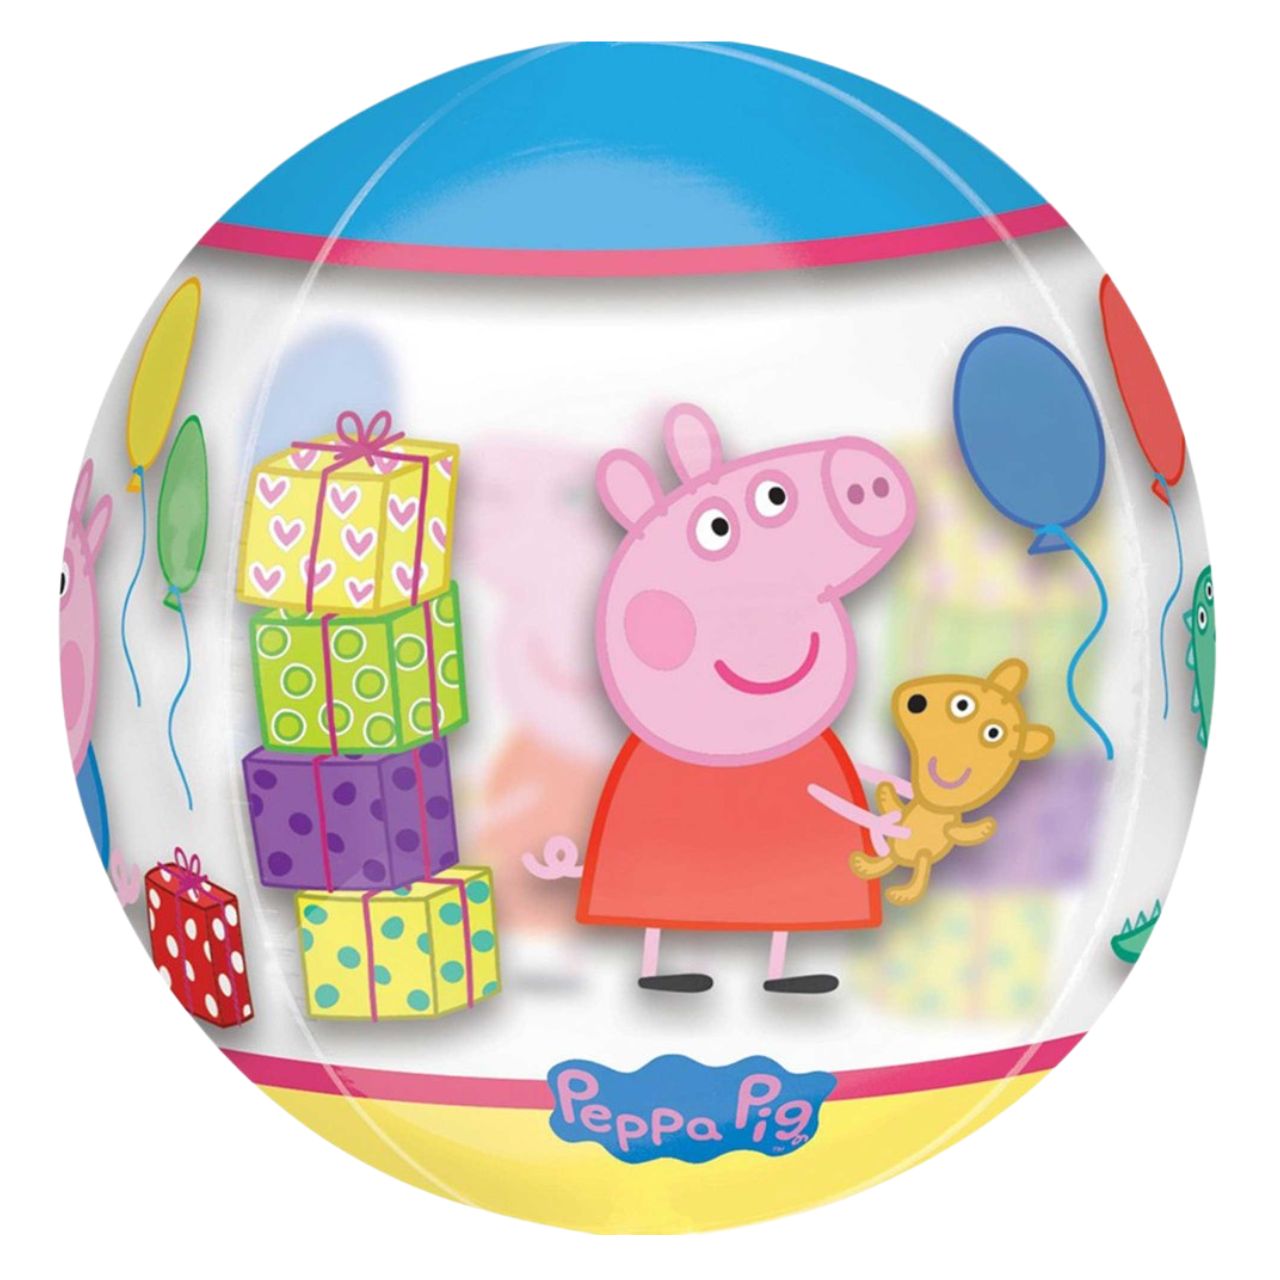 Peppa Pig Clear Orbz Balloon